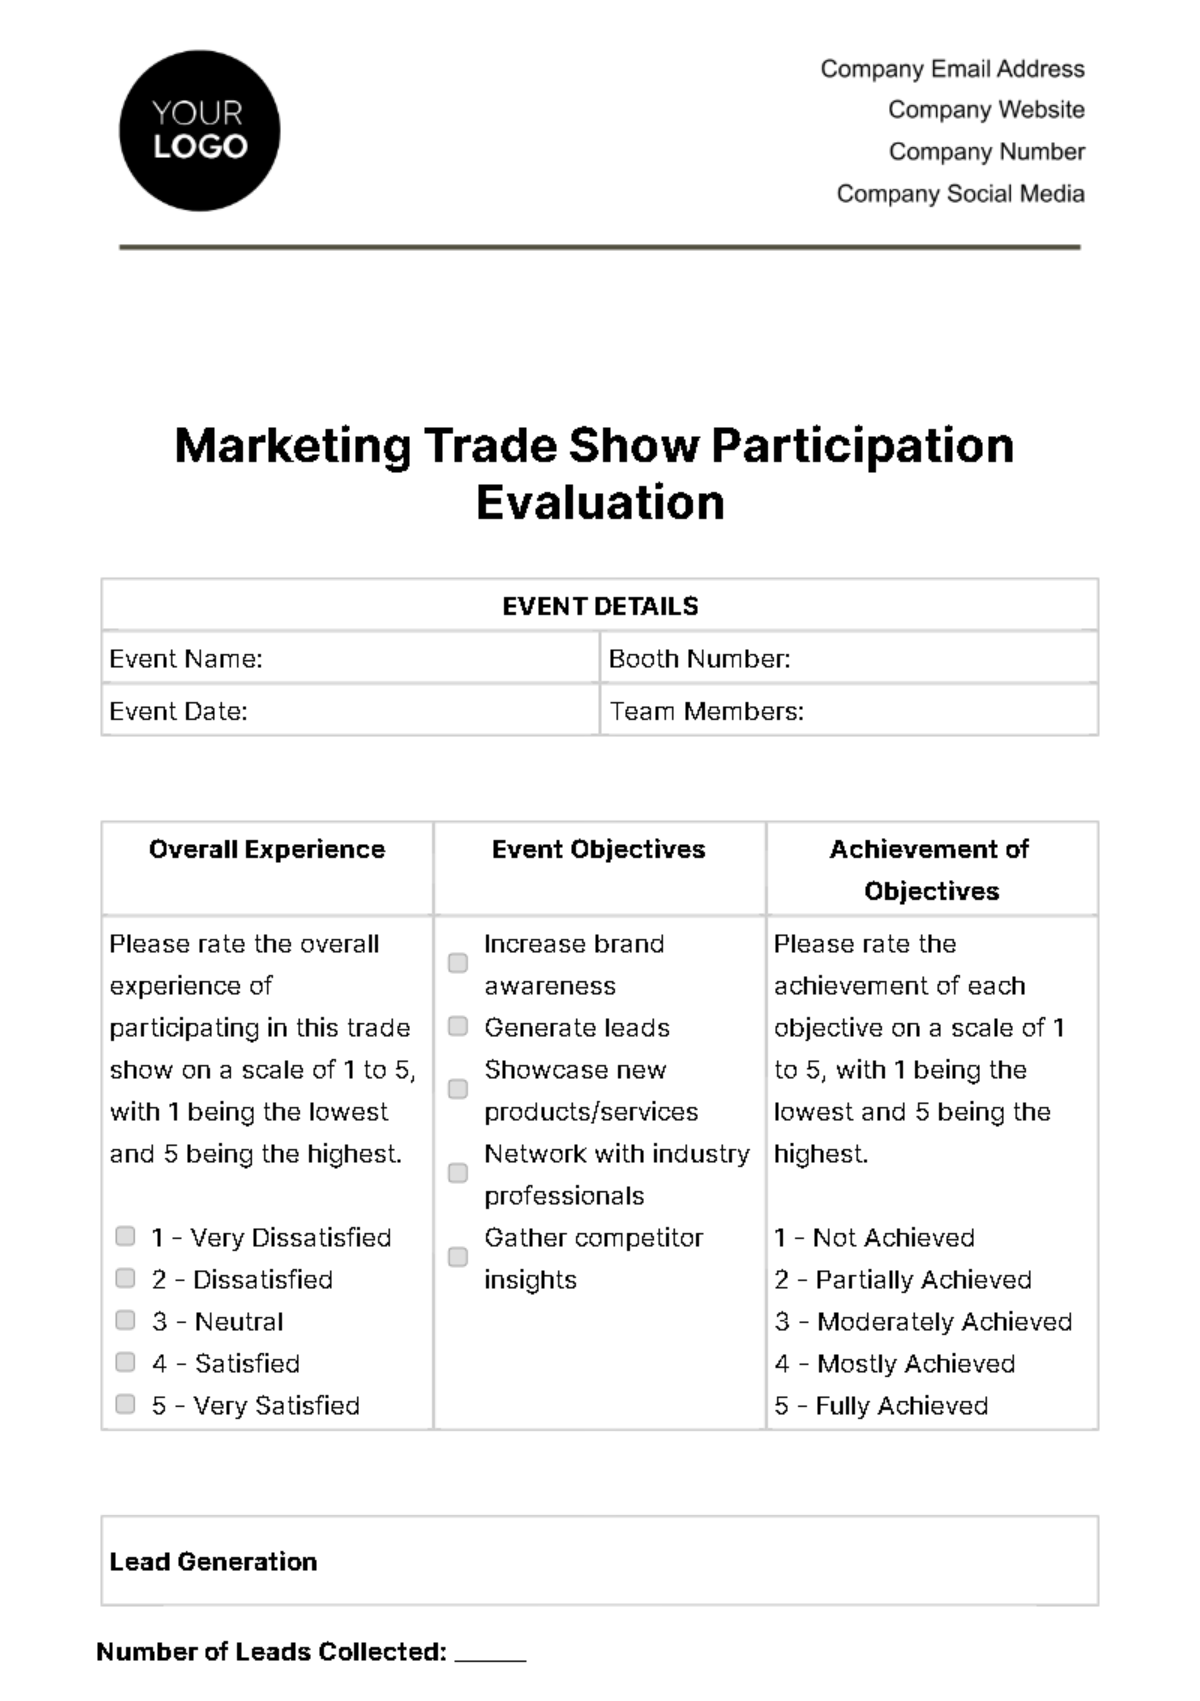 Marketing Trade Show Participation Evaluation Template